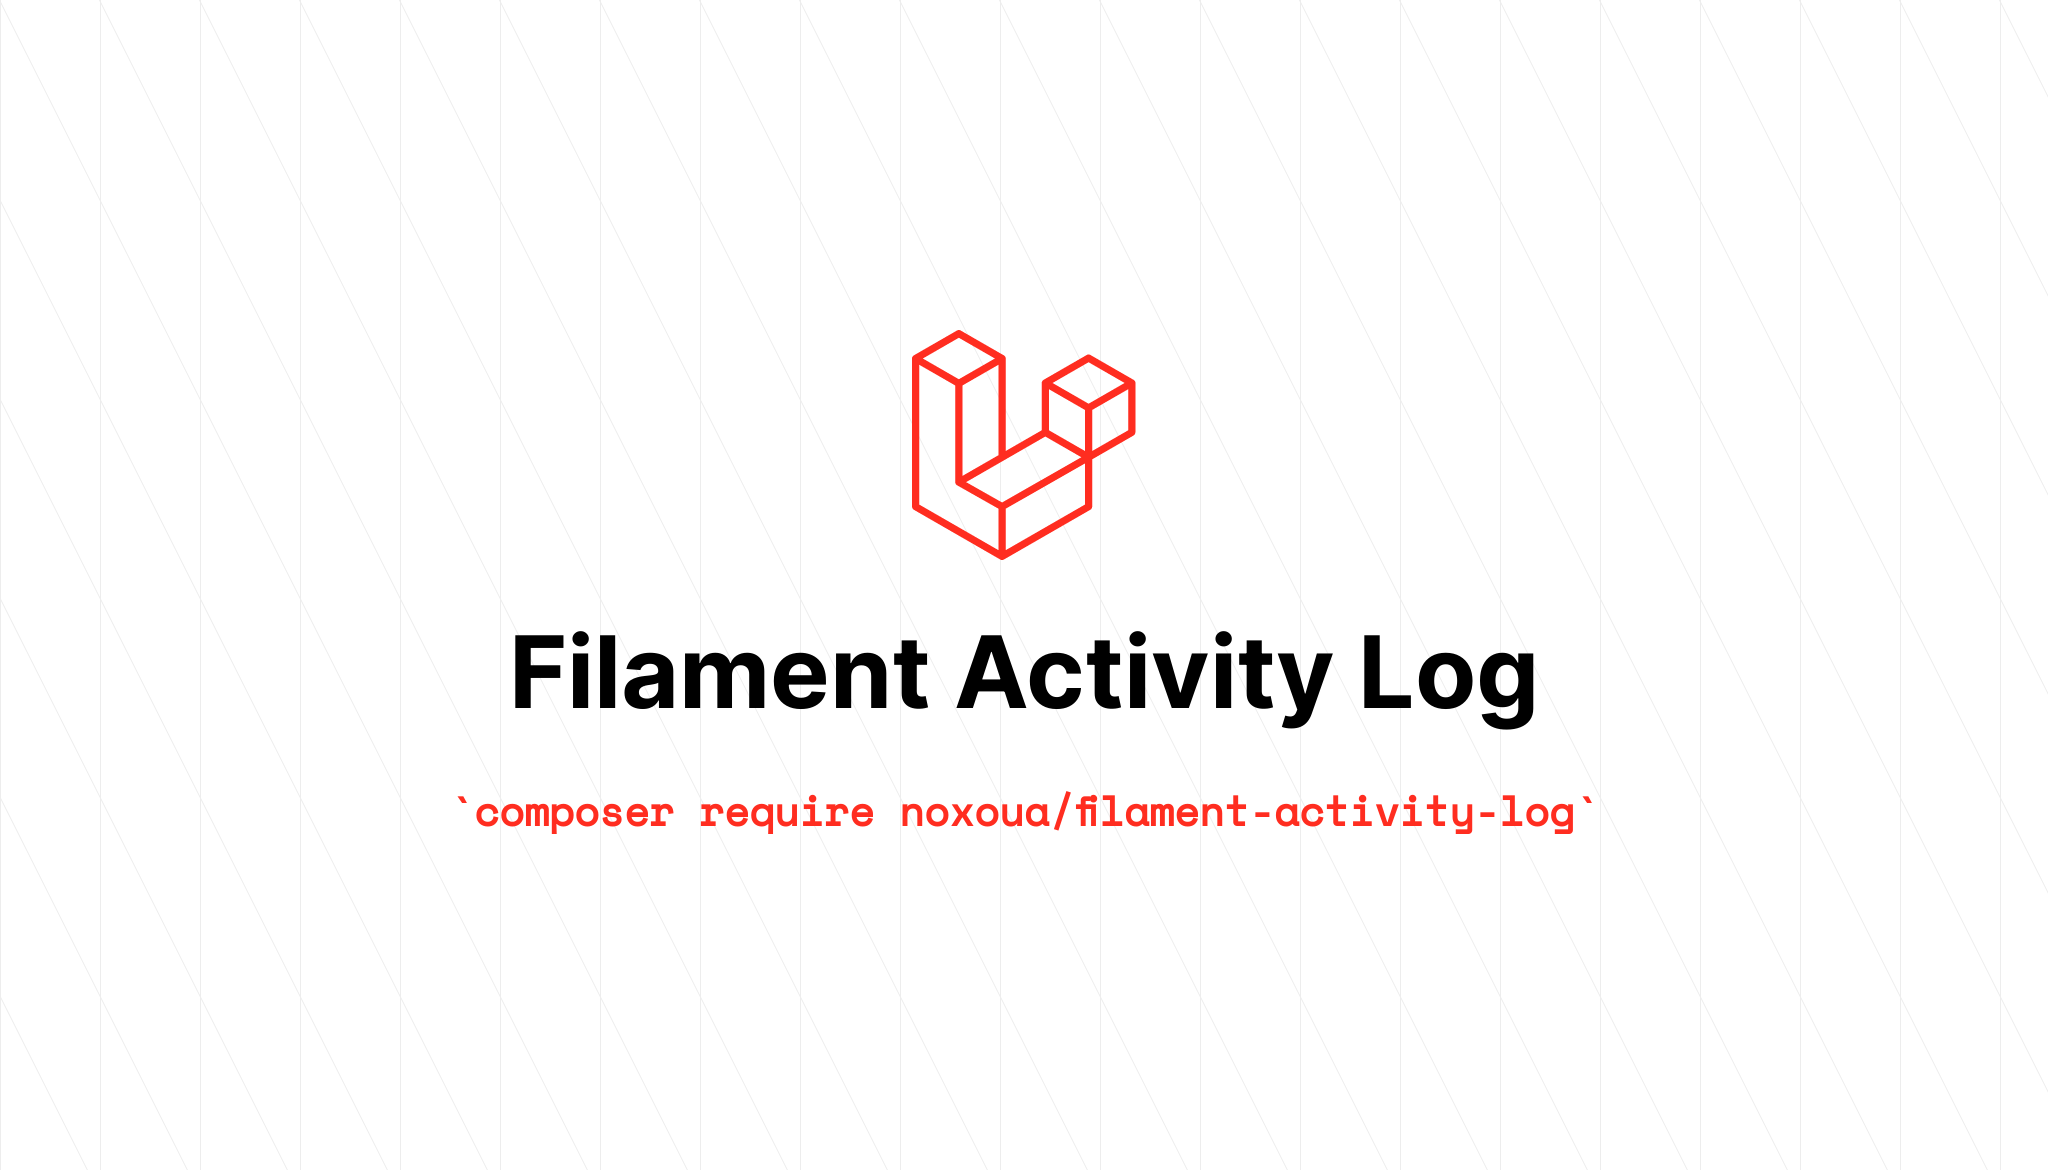 noxoua/filament-activity-log - Package Image